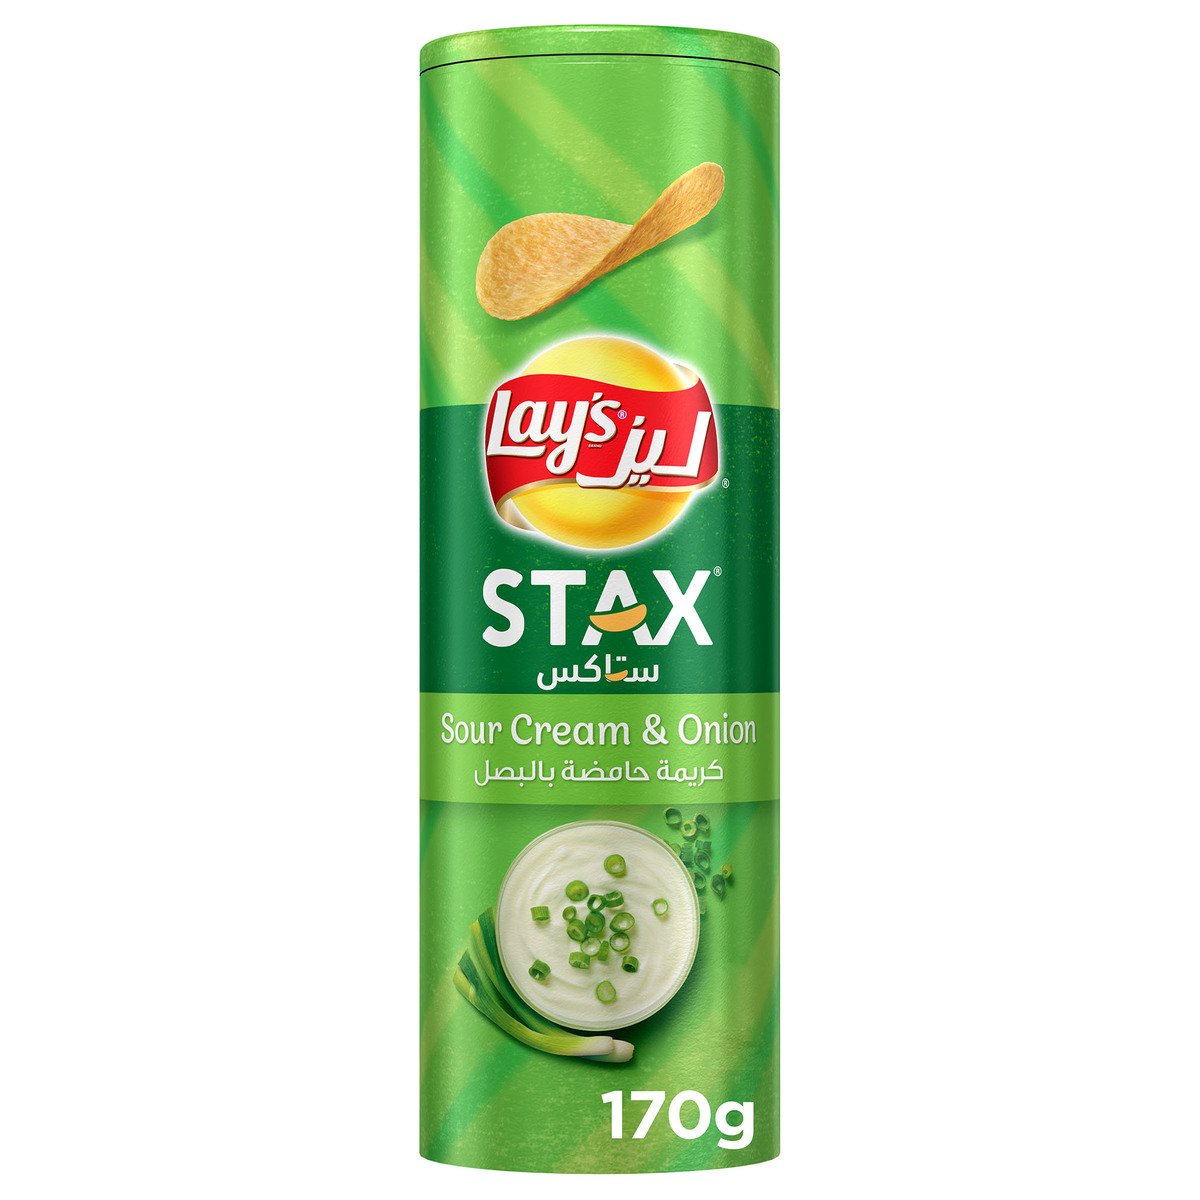 Lay's Stax Potato Crisps Sour Cream & Onion 170 g